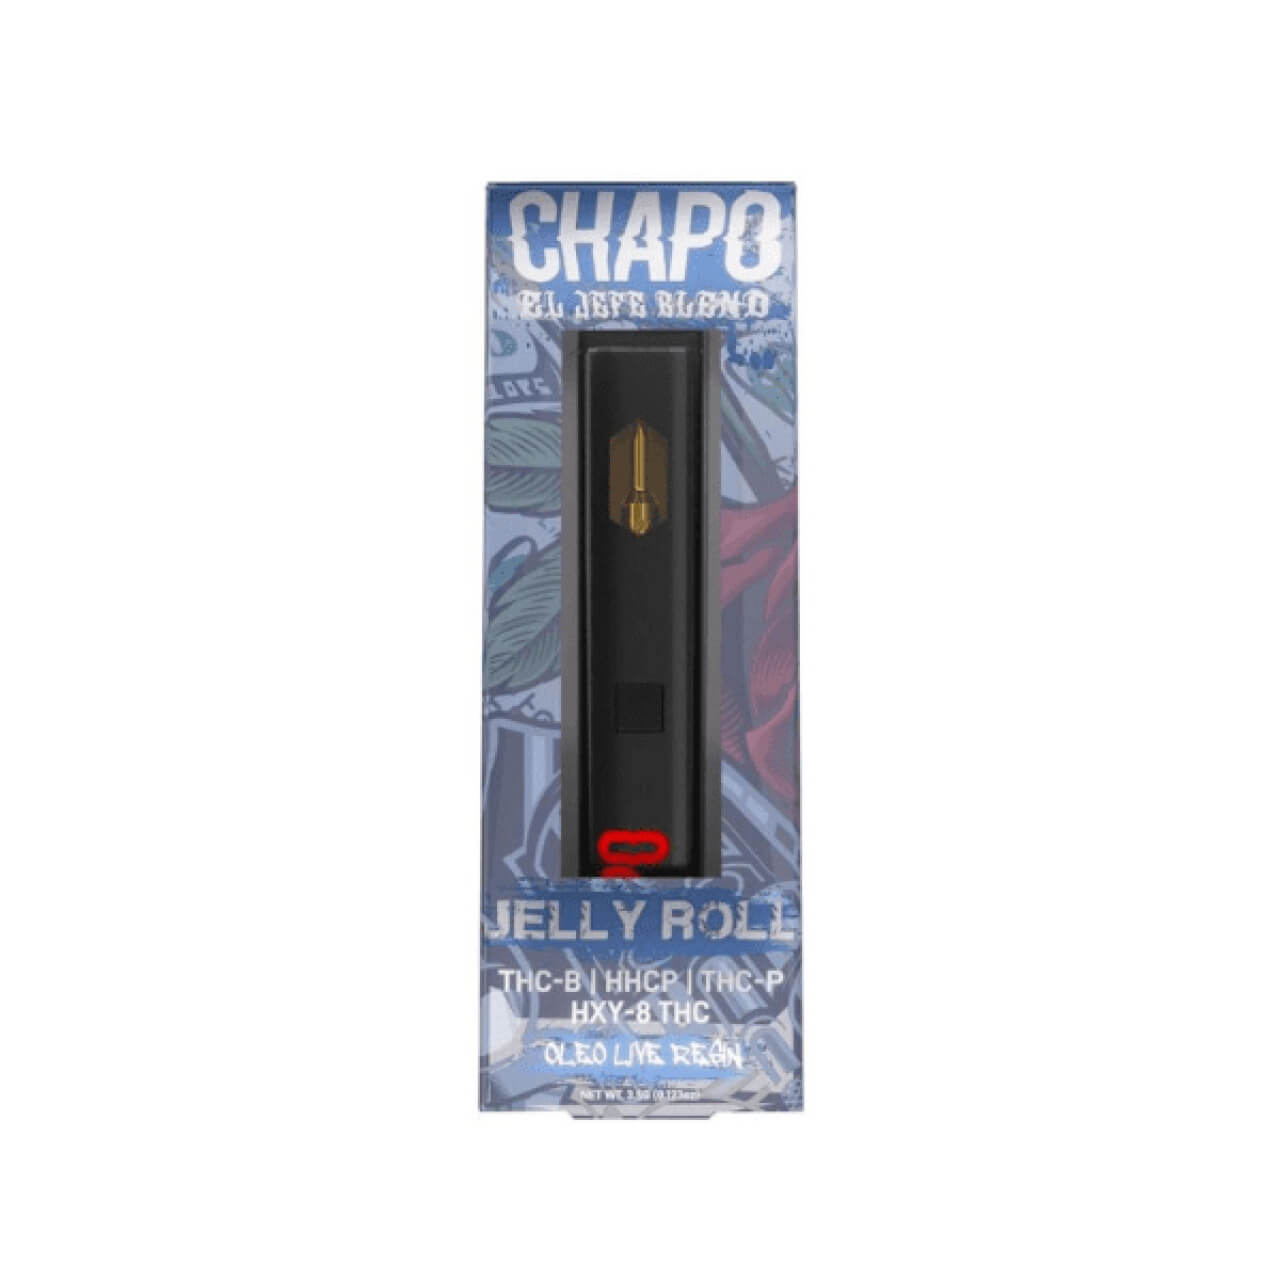 Chapo Extrax EL Jefe Blend Oleo Live Resin THC-B HHC-P THC-P HYX-8 3.5G Pre-Heat Disposables